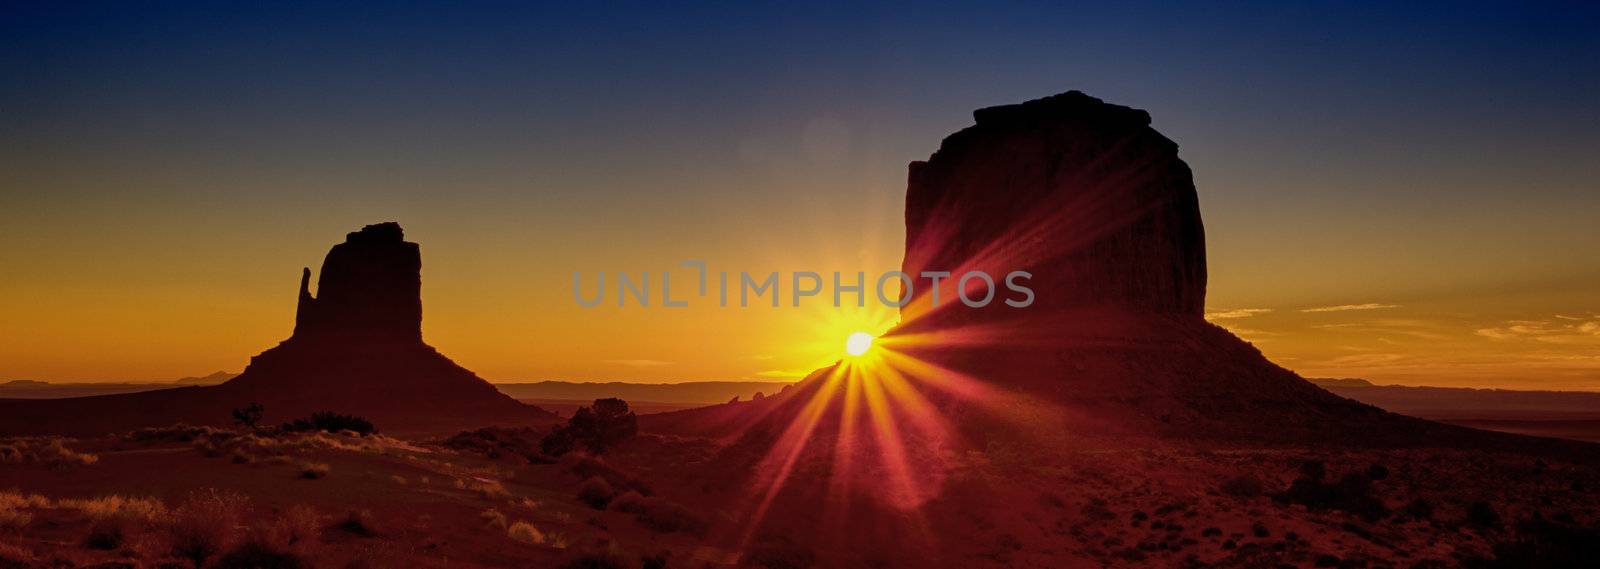 famous Monument Valley Tribal Park At Sunrise, Arizona 